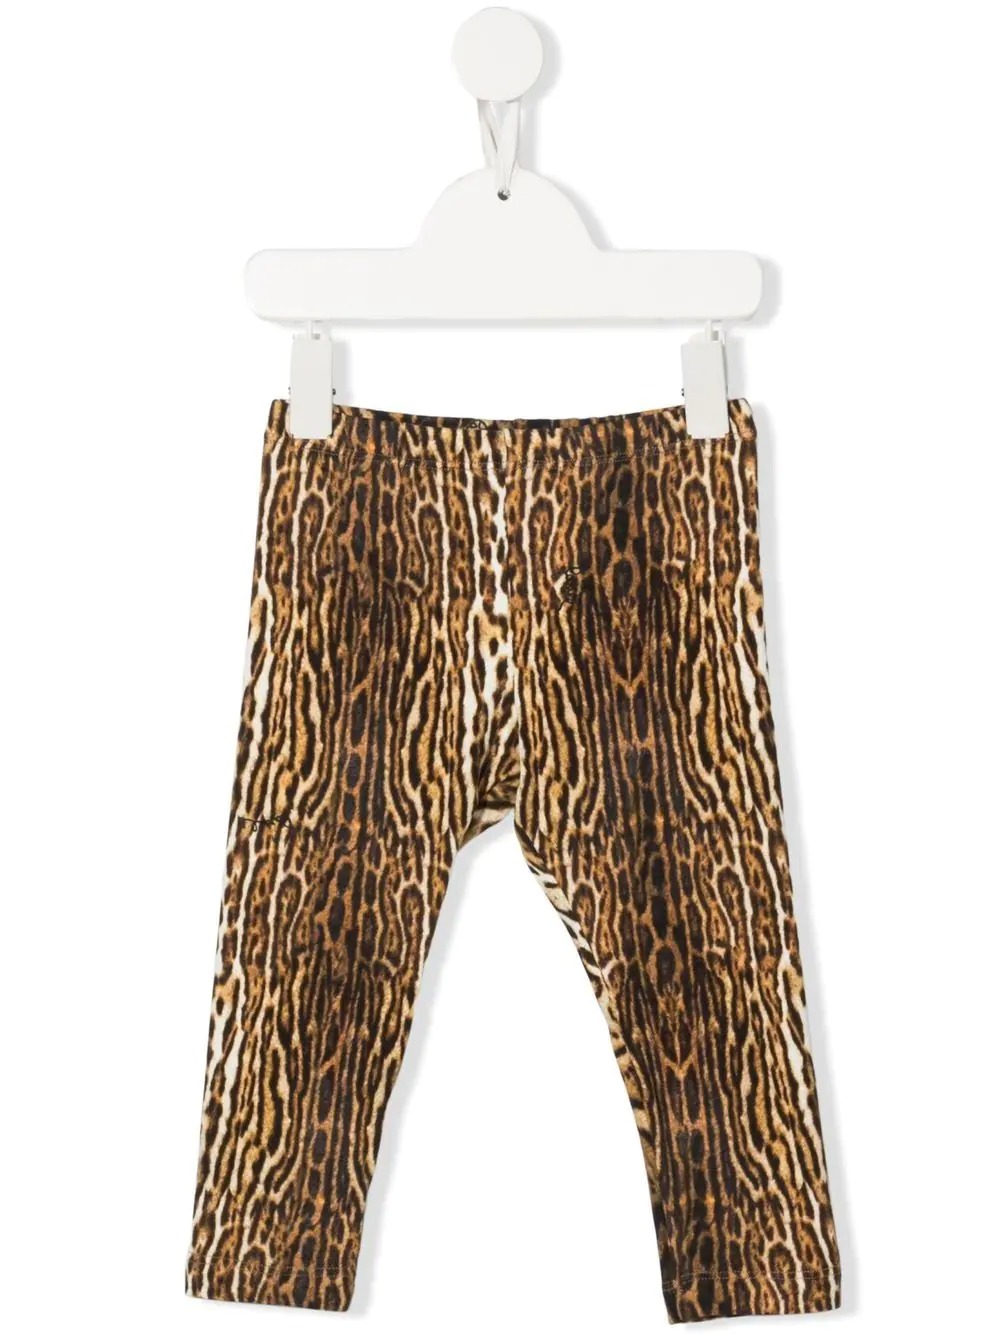 Amazon.com: Aslsiy Girls Leggings Leopard Skin Toddler Stretch Tights Pants  Tiger Print Pattern Full Length Yoga Dance Pants 4T: Clothing, Shoes &  Jewelry